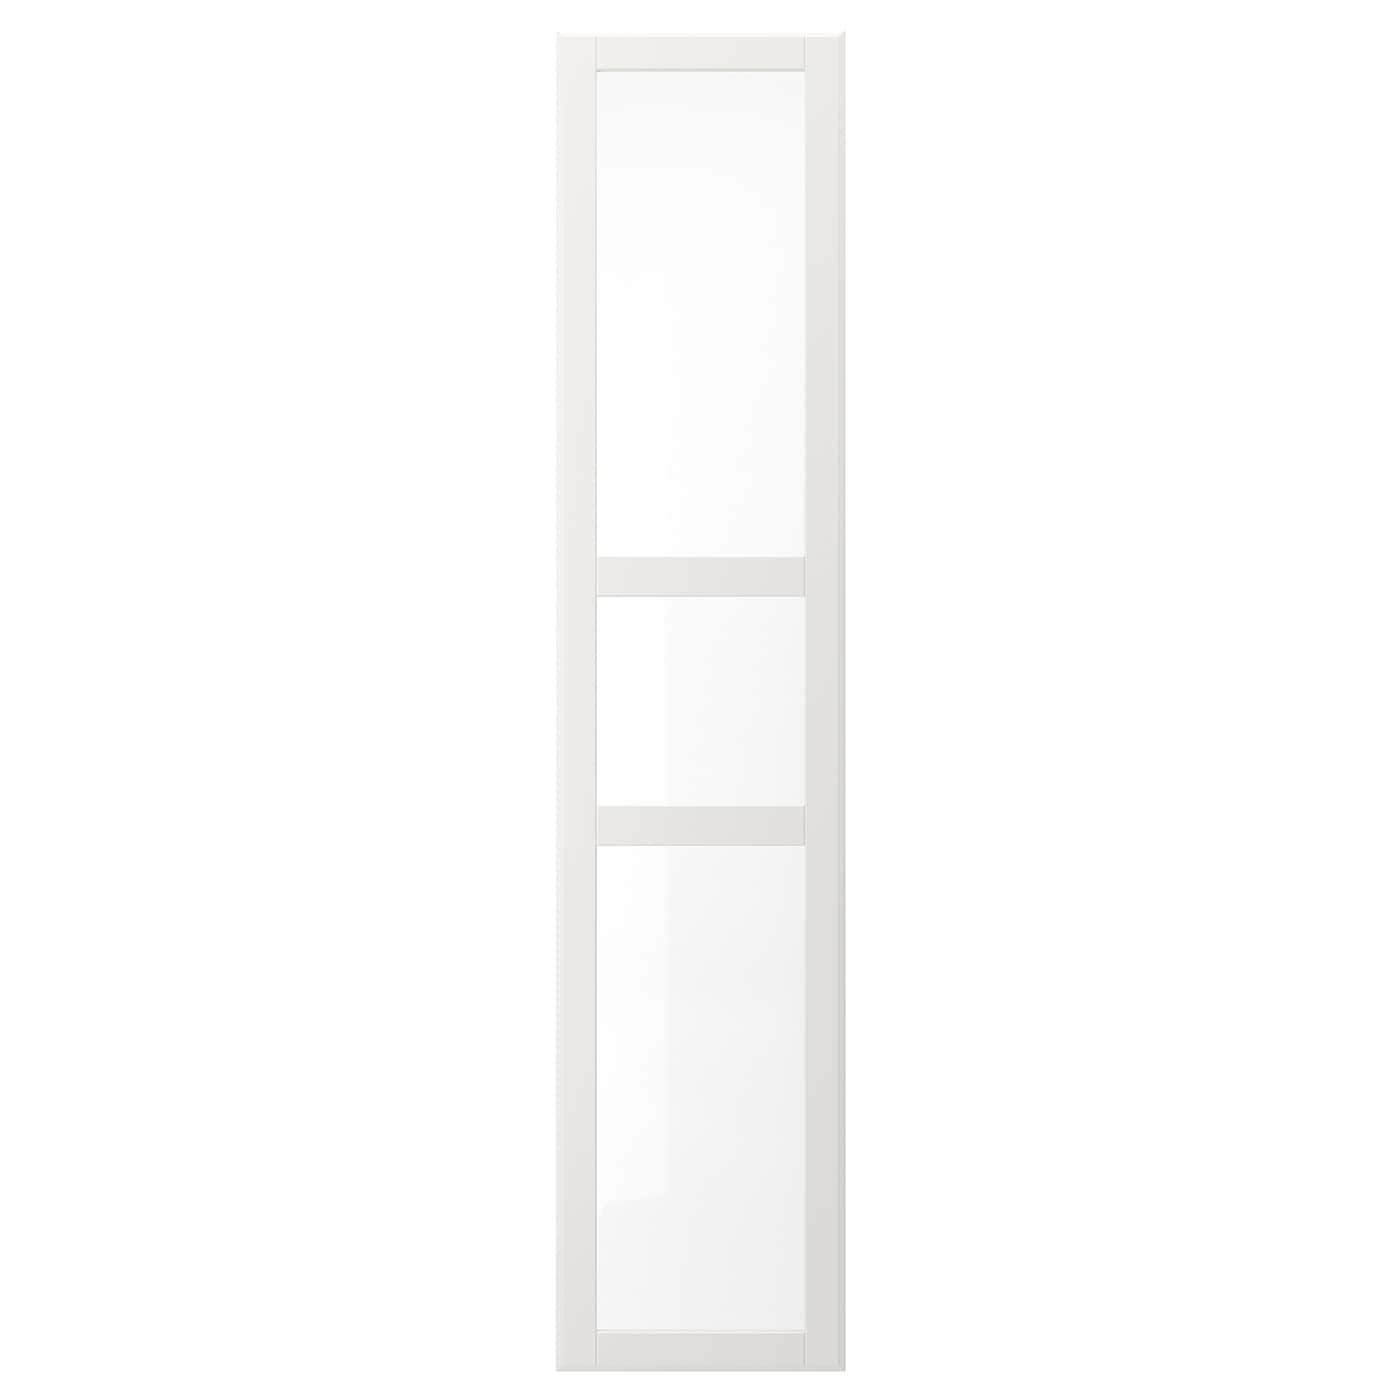 Дверь шкафа - TYSSEDAL IKEA/ ТИССЕДАЛЬ ИКЕА, 50x229 см, прозрачный